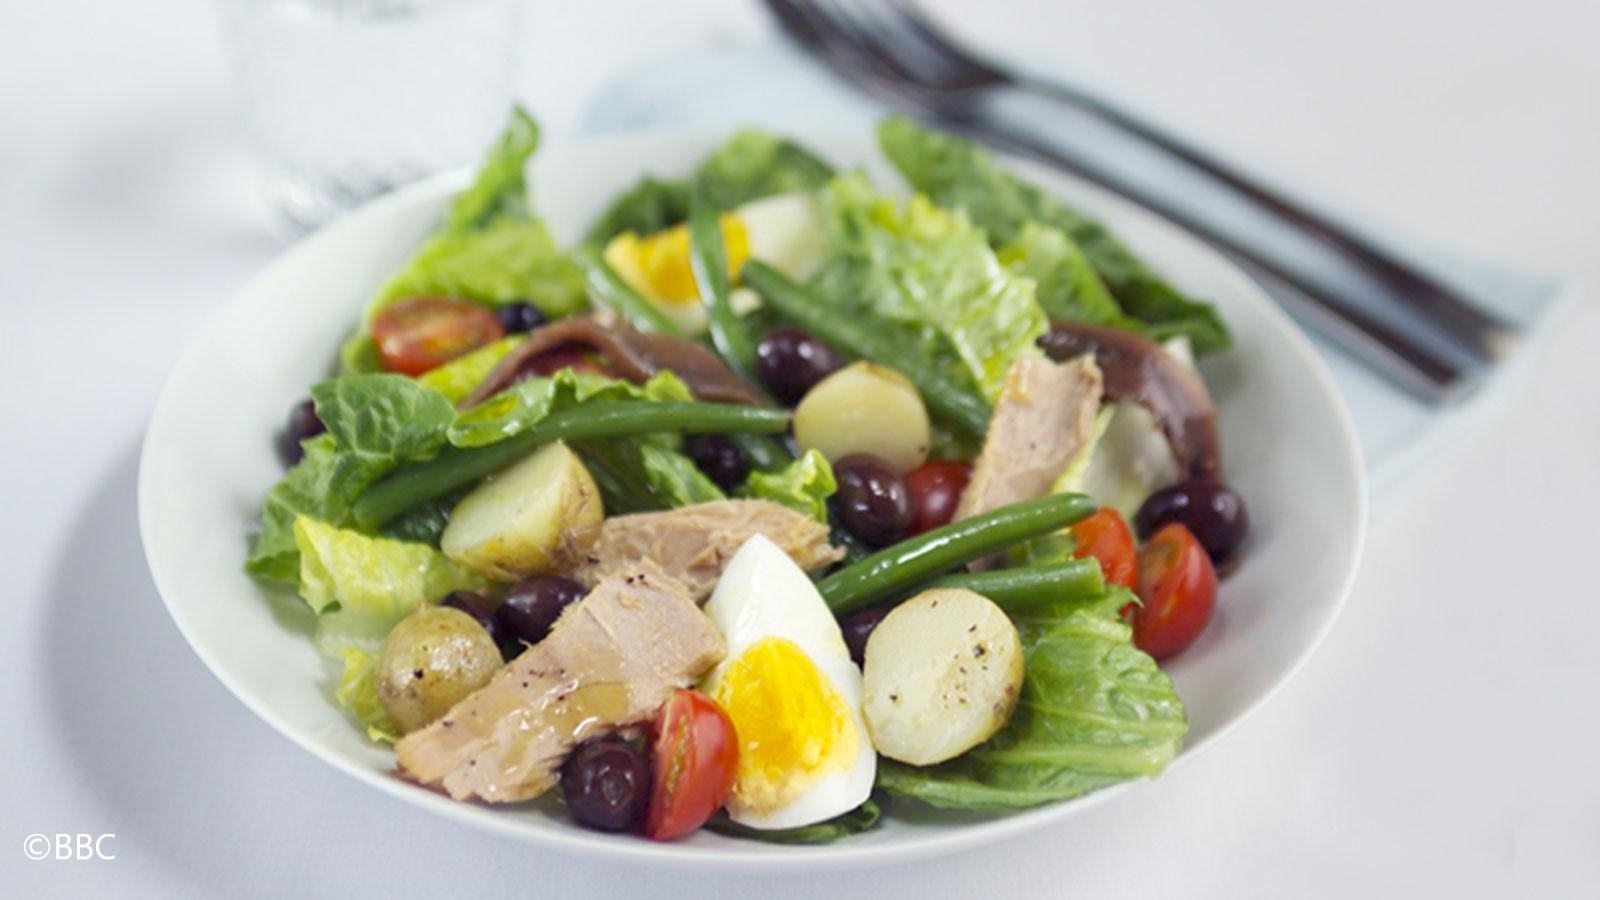 Image of the Salade Nicoise